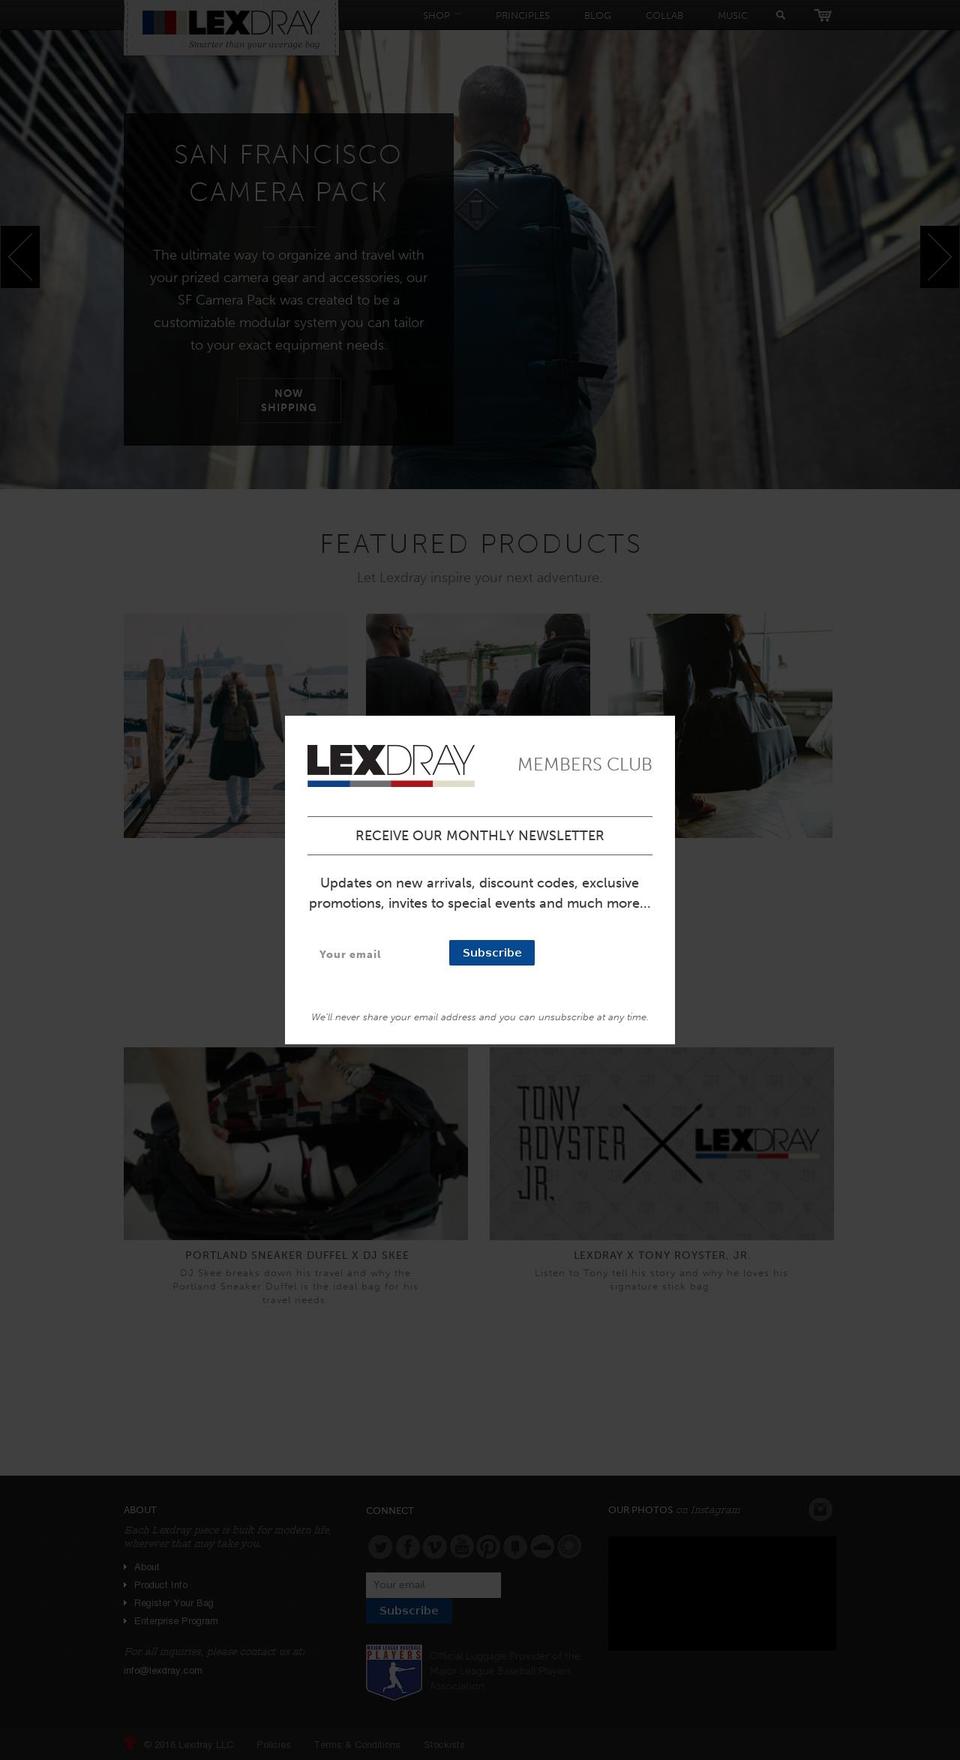 Responsive Shopify theme site example lexdray.com